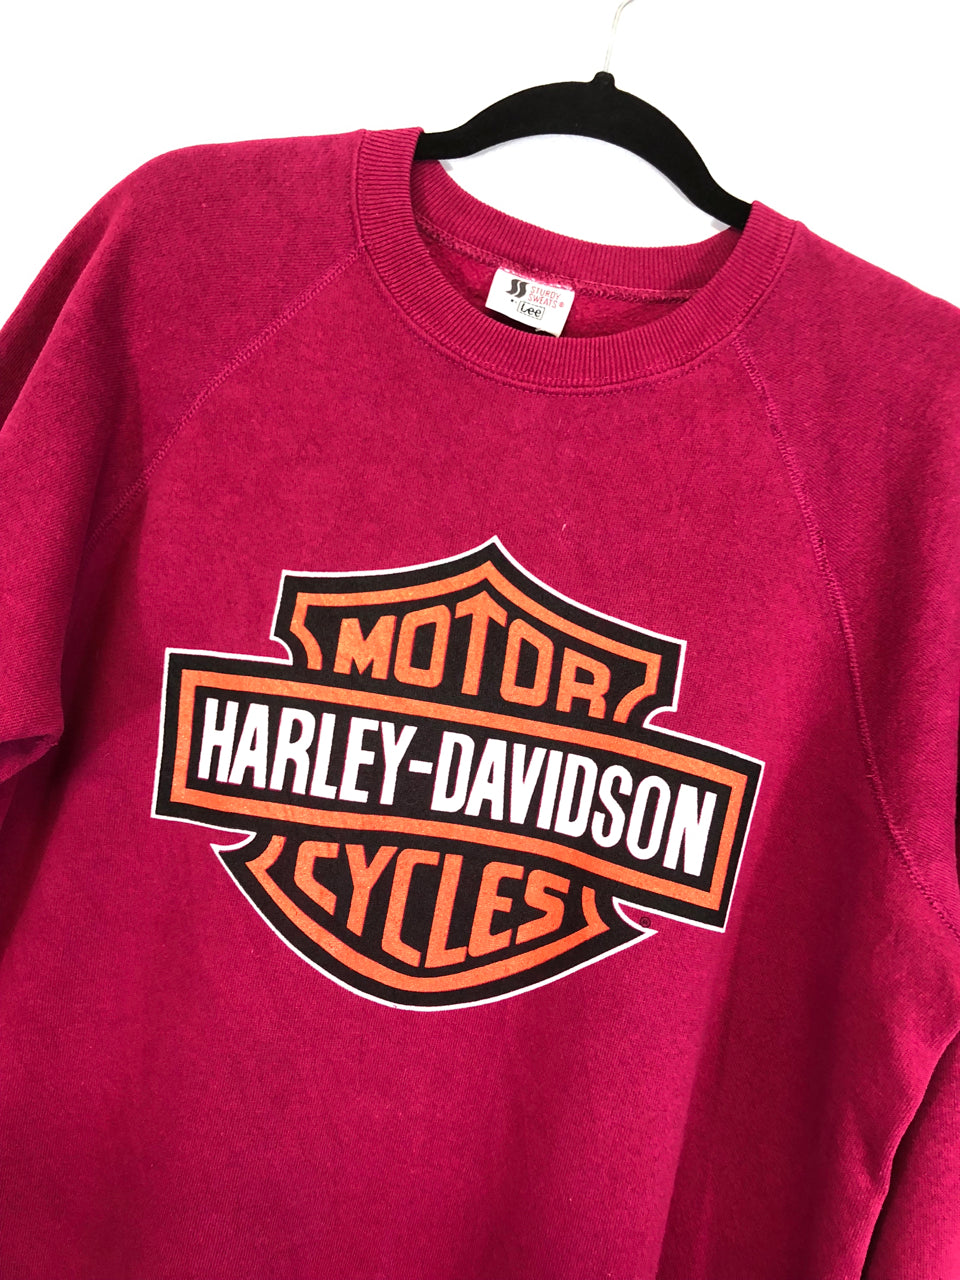 Harley Davidson Pink Sweatshirt Dress